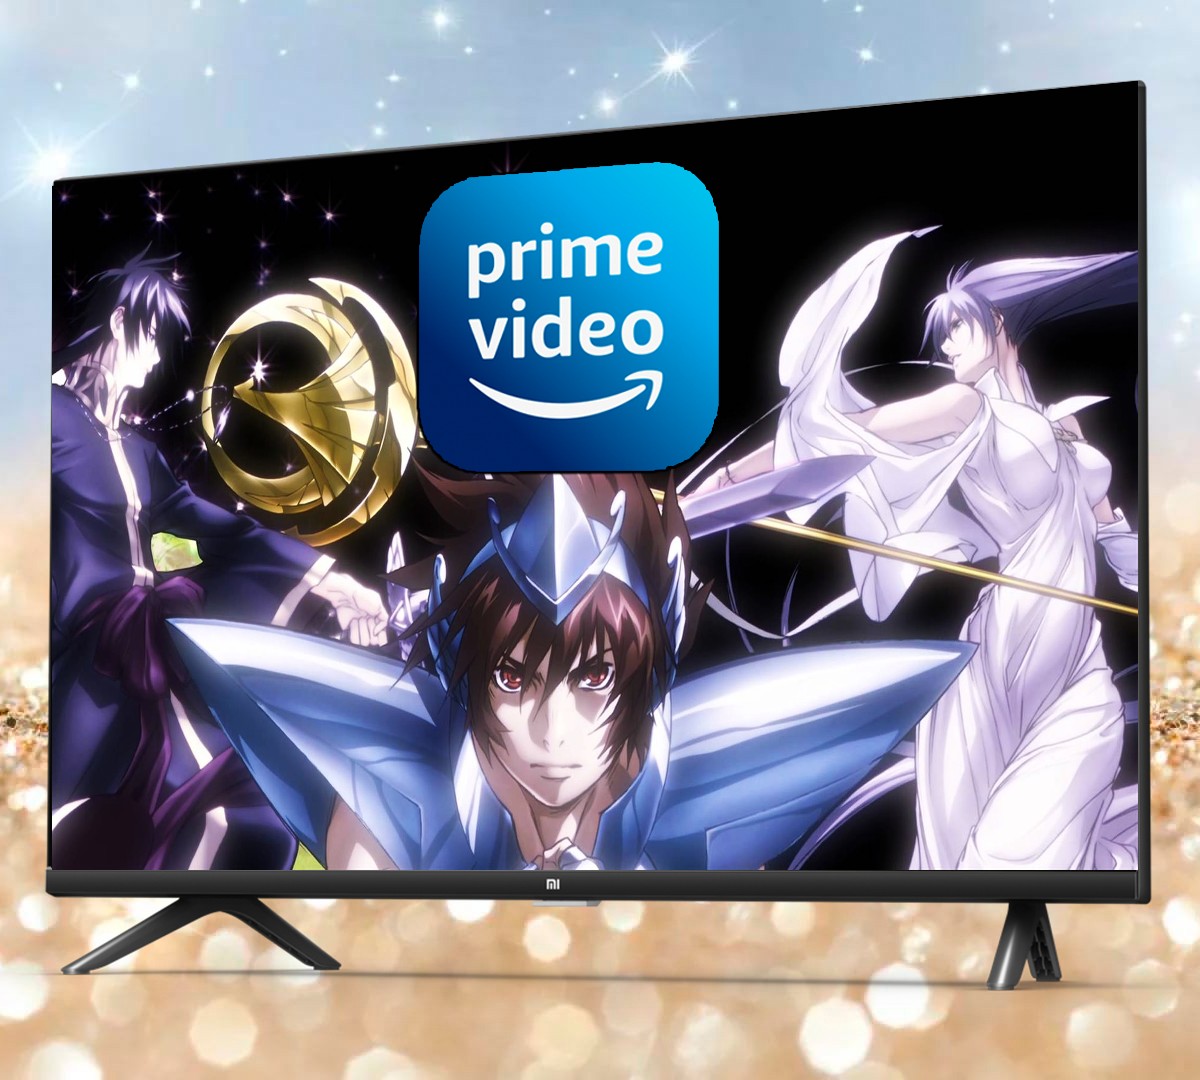 Onde assistir animes oficialmente no Brasil [Streaming/Home-Vídeo